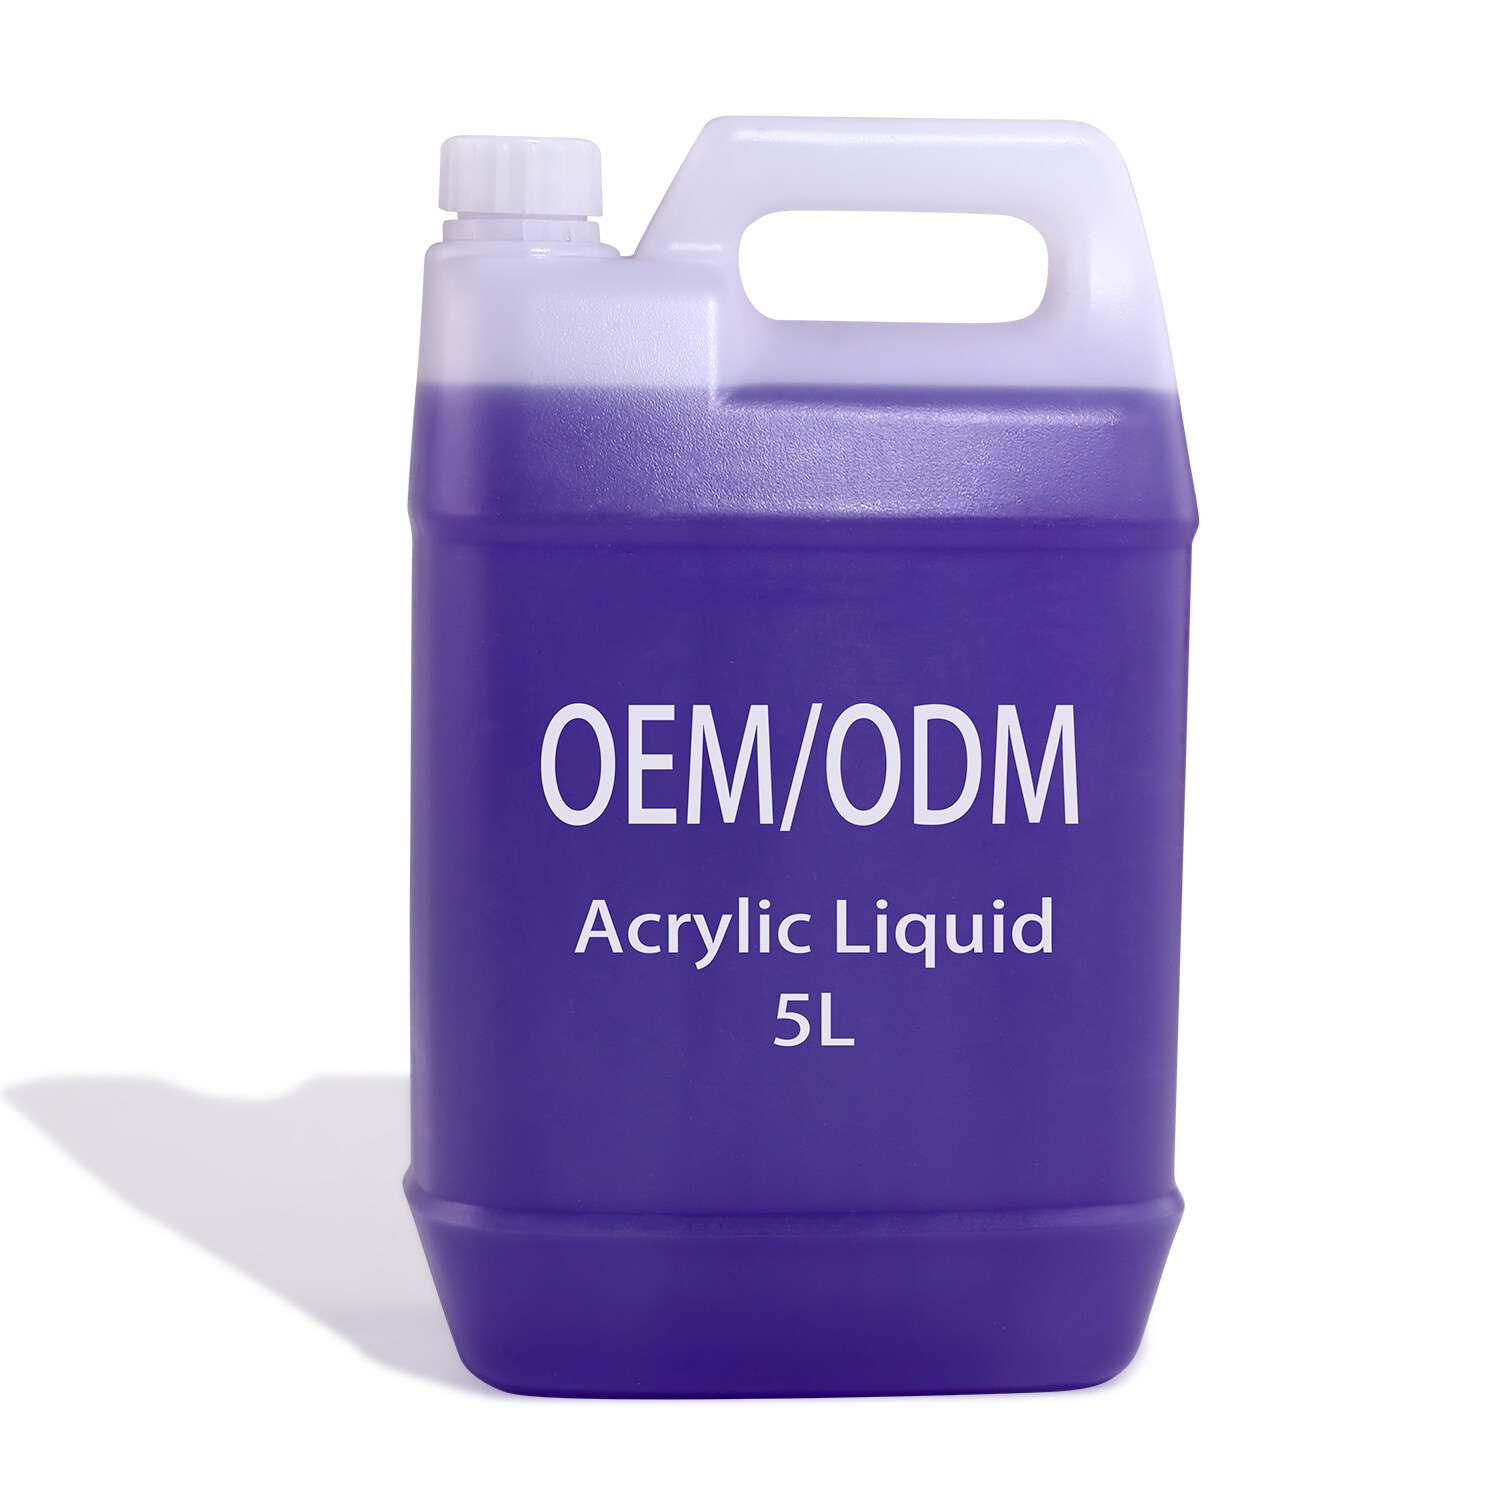 OEM monome chất lỏng acrylic, monome lỏng acrylic ODM, chất lỏng monome acrylic